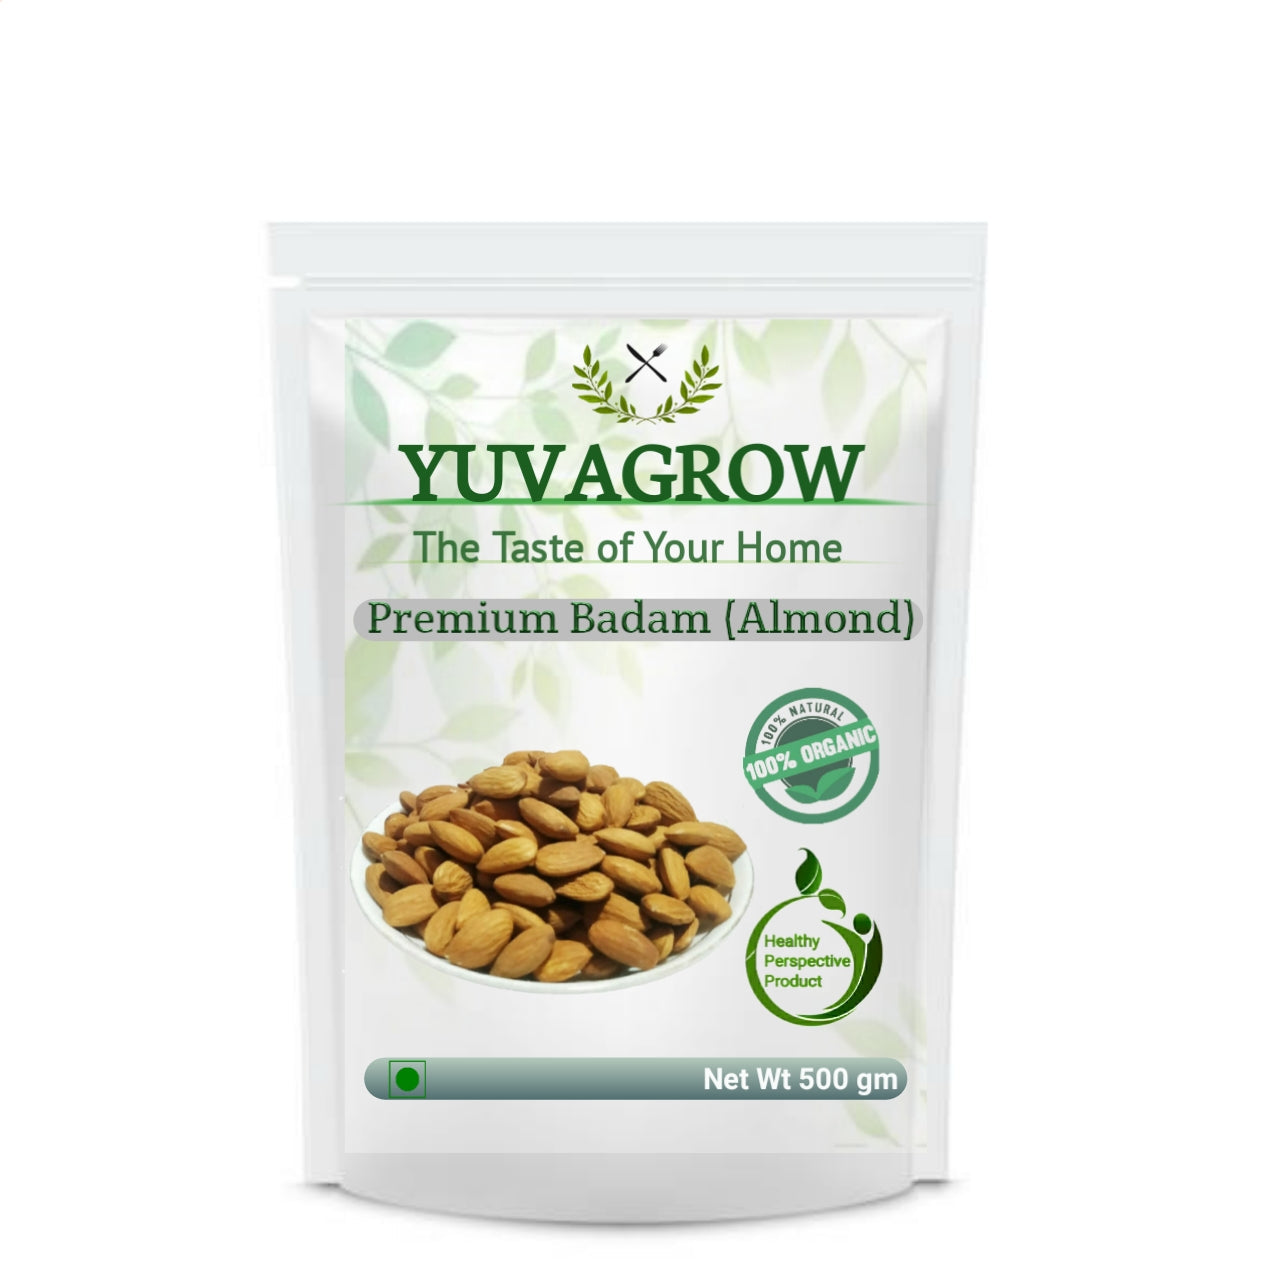 Yuvagrow Premium Badam (Almond) - buy in USA, Australia, Canada